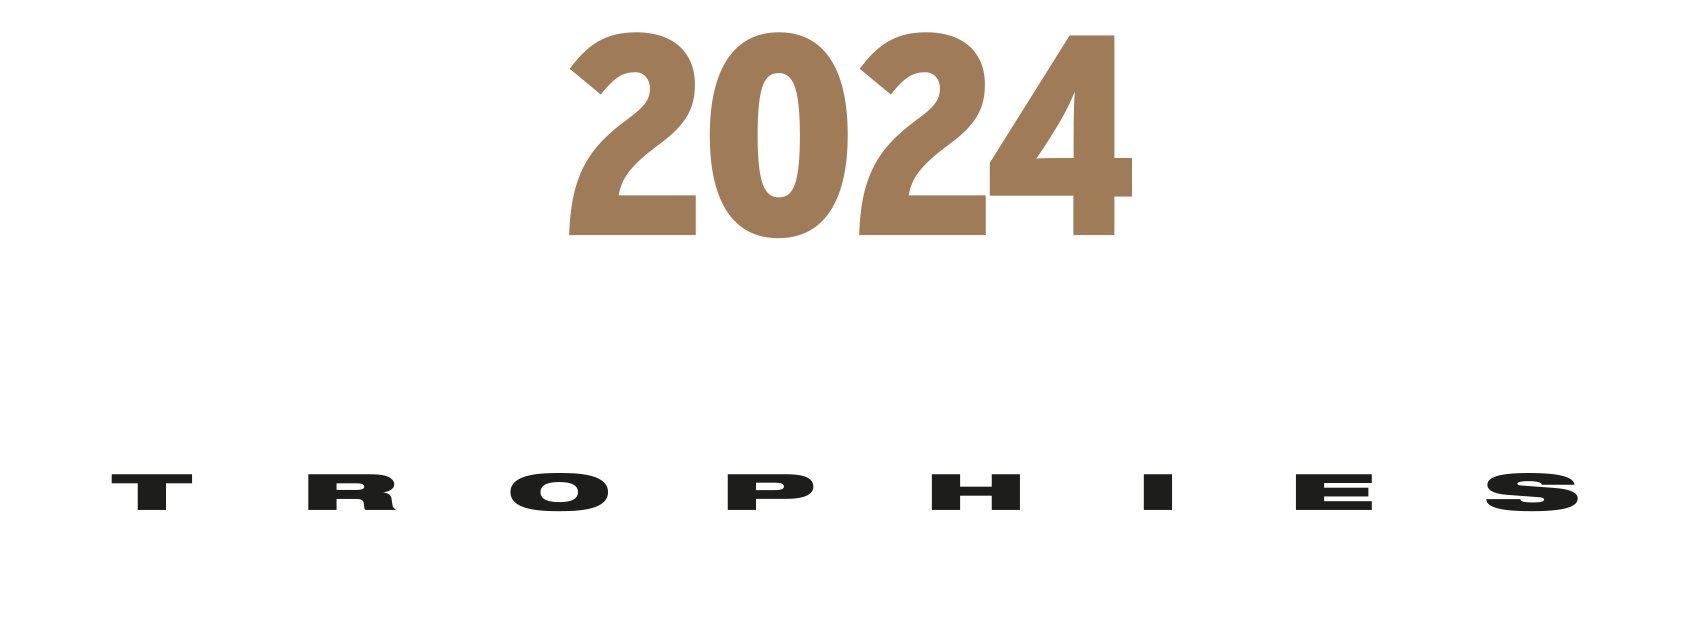 logo-world-yachts-trophies-2024-23th-edition-blanc-UK